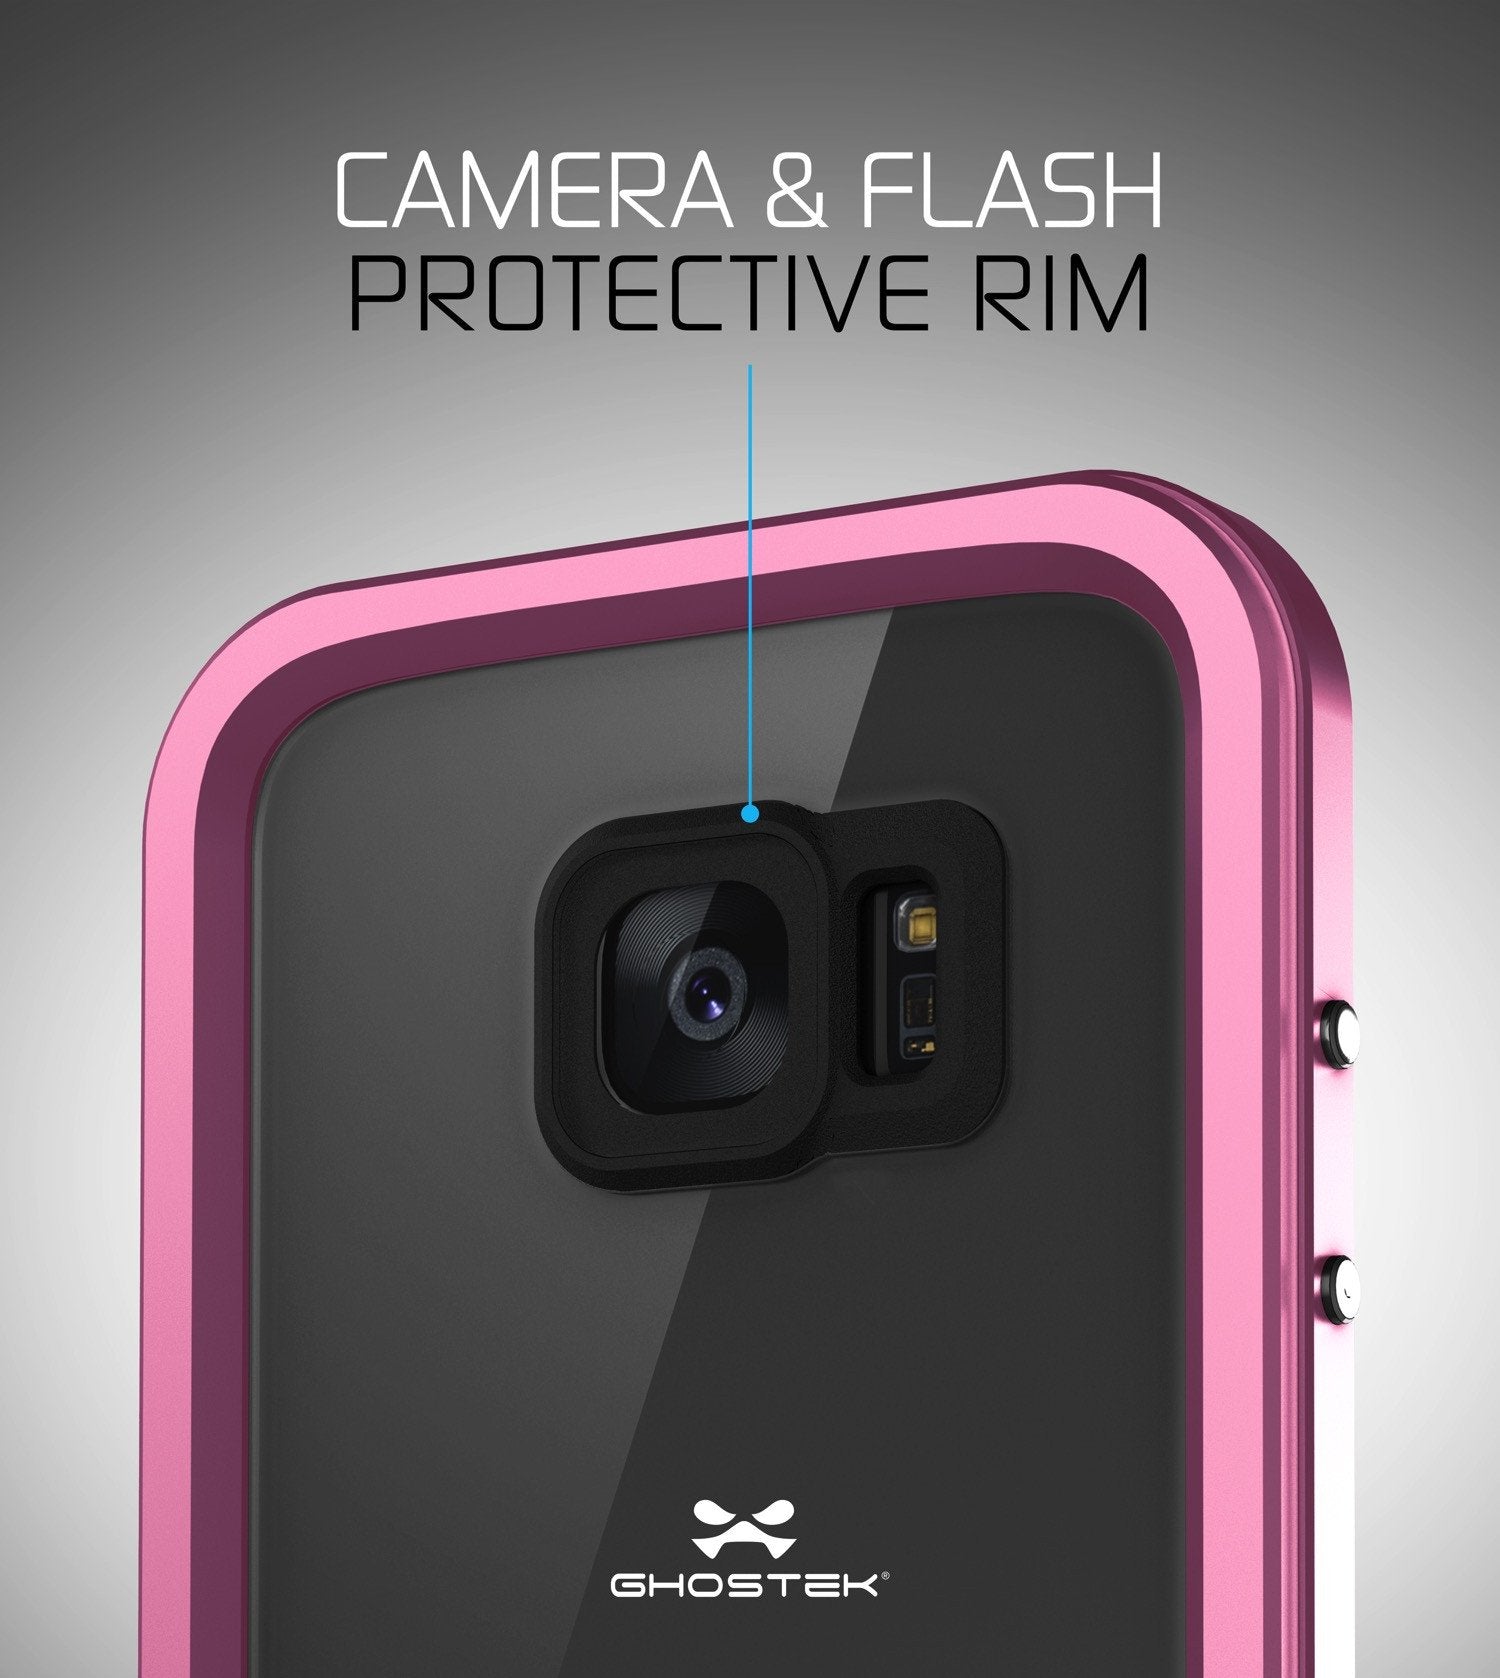 Galaxy S7 EDGE Waterproof Case, Ghostek Atomic 2.0 Pink Shock/Dirt/Snow Proof | Lifetime Warranty